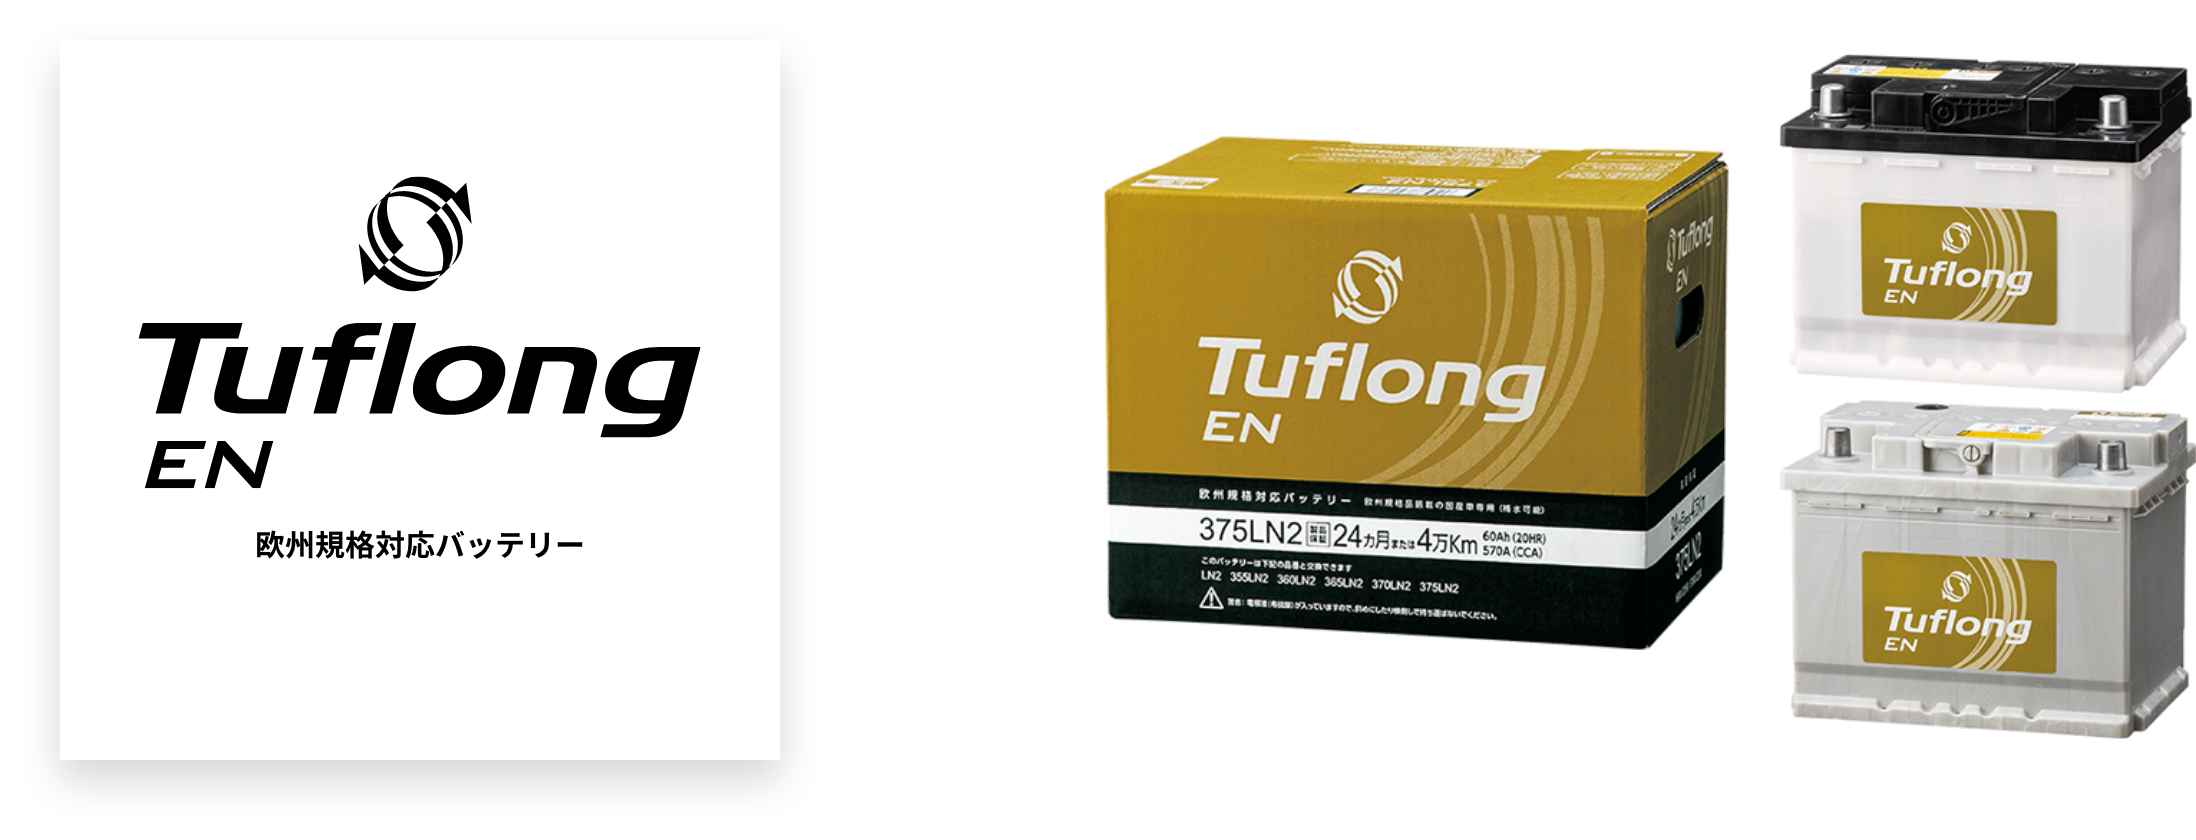 Tuflong EN - エナジーウィズ株式会社